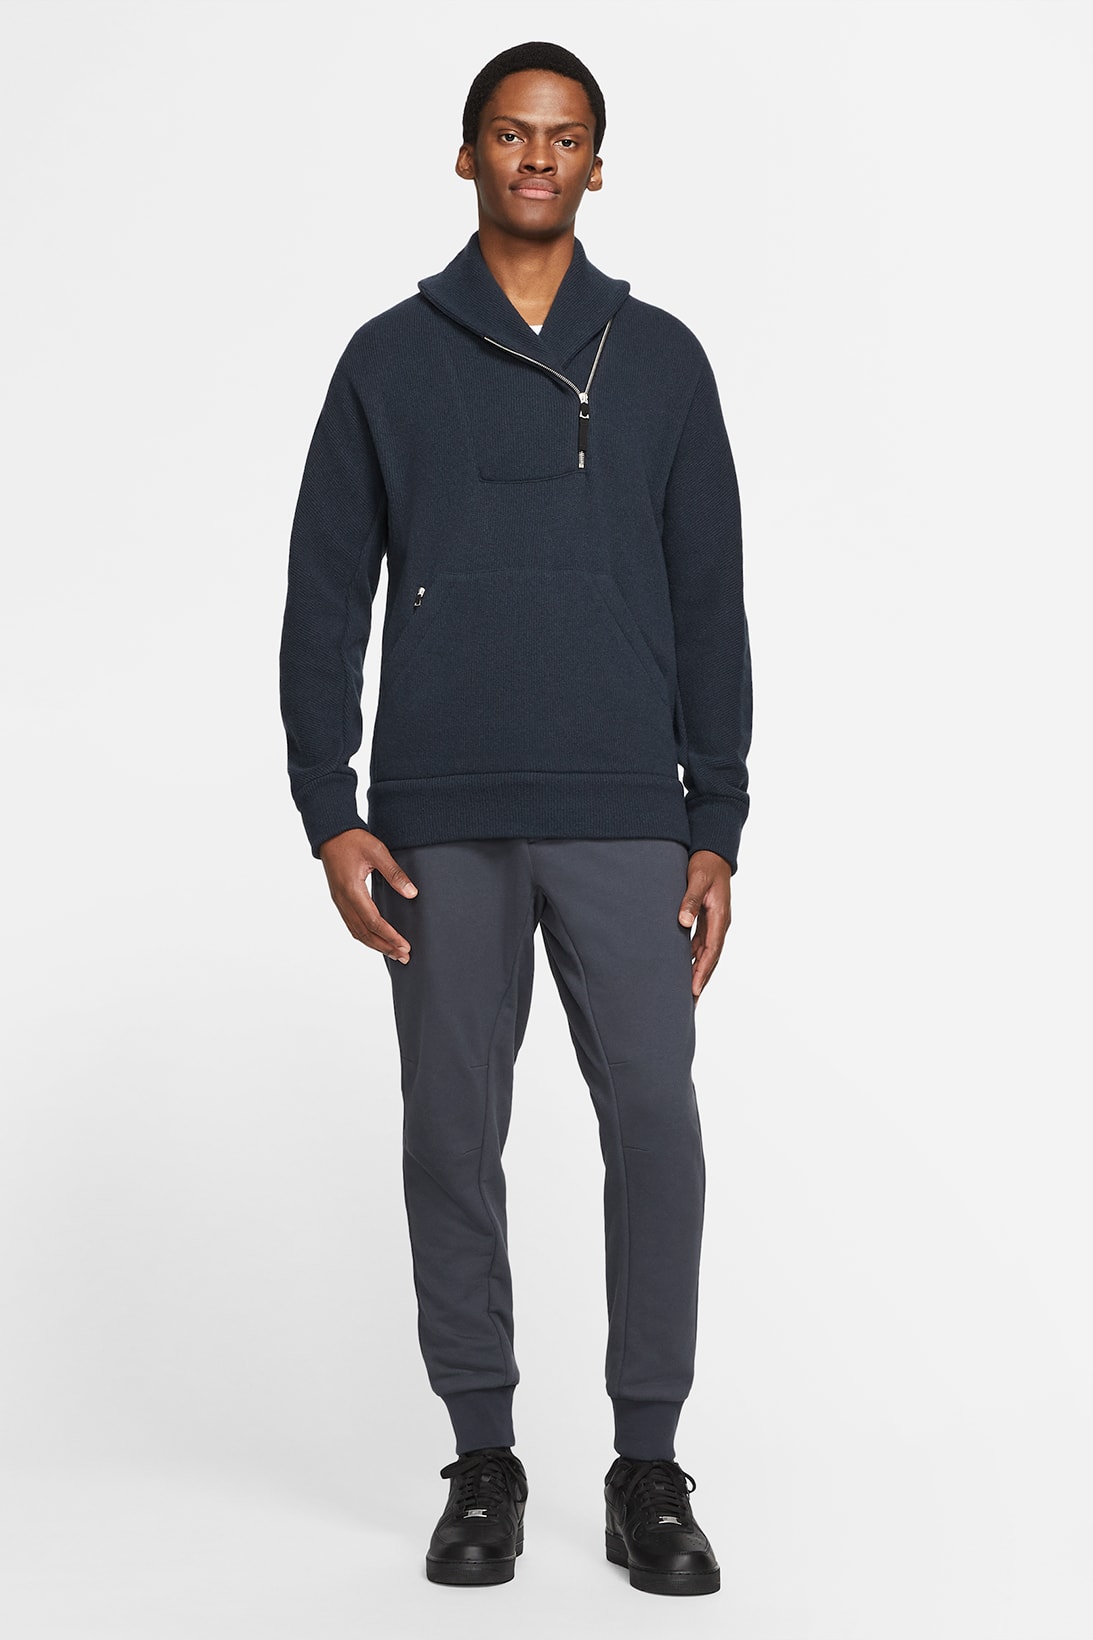 nike design exploration apparel collection sweater pants